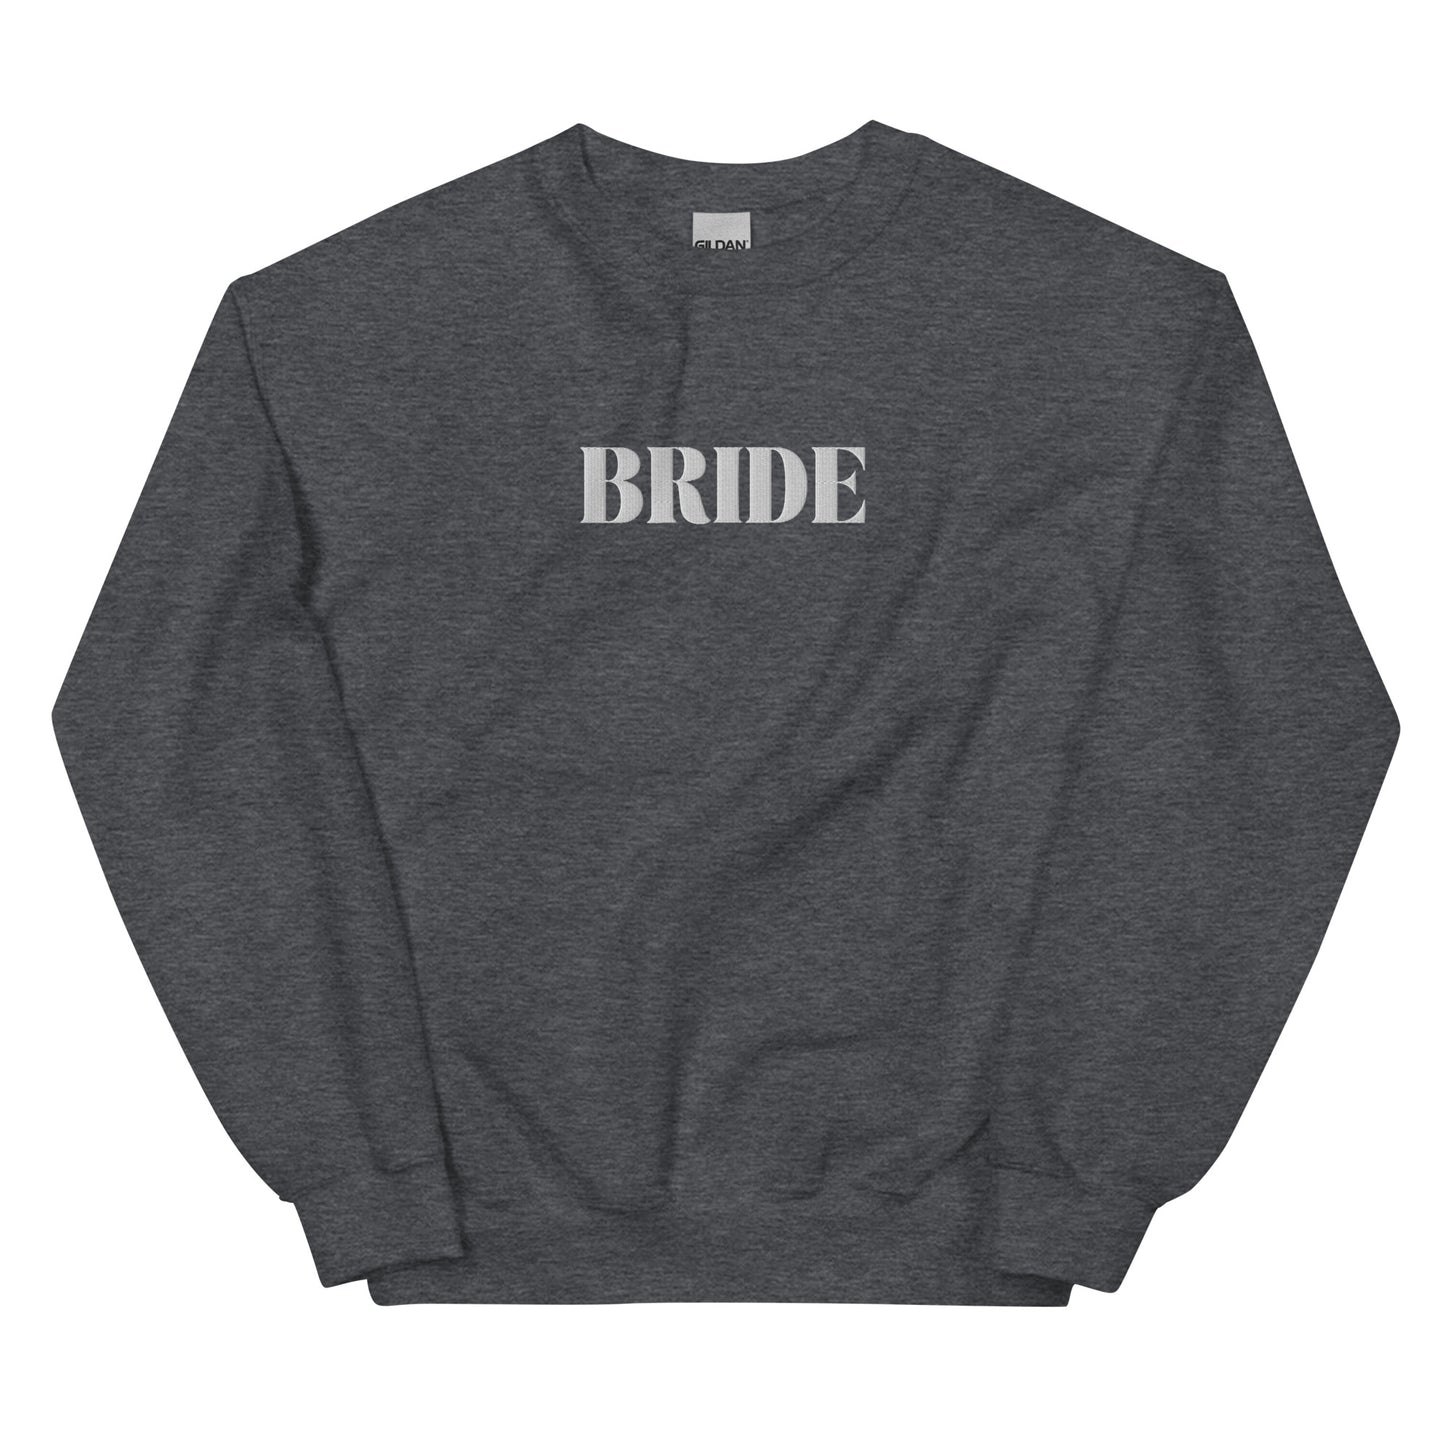 Bride Embroidered Crewneck Sweatshirt